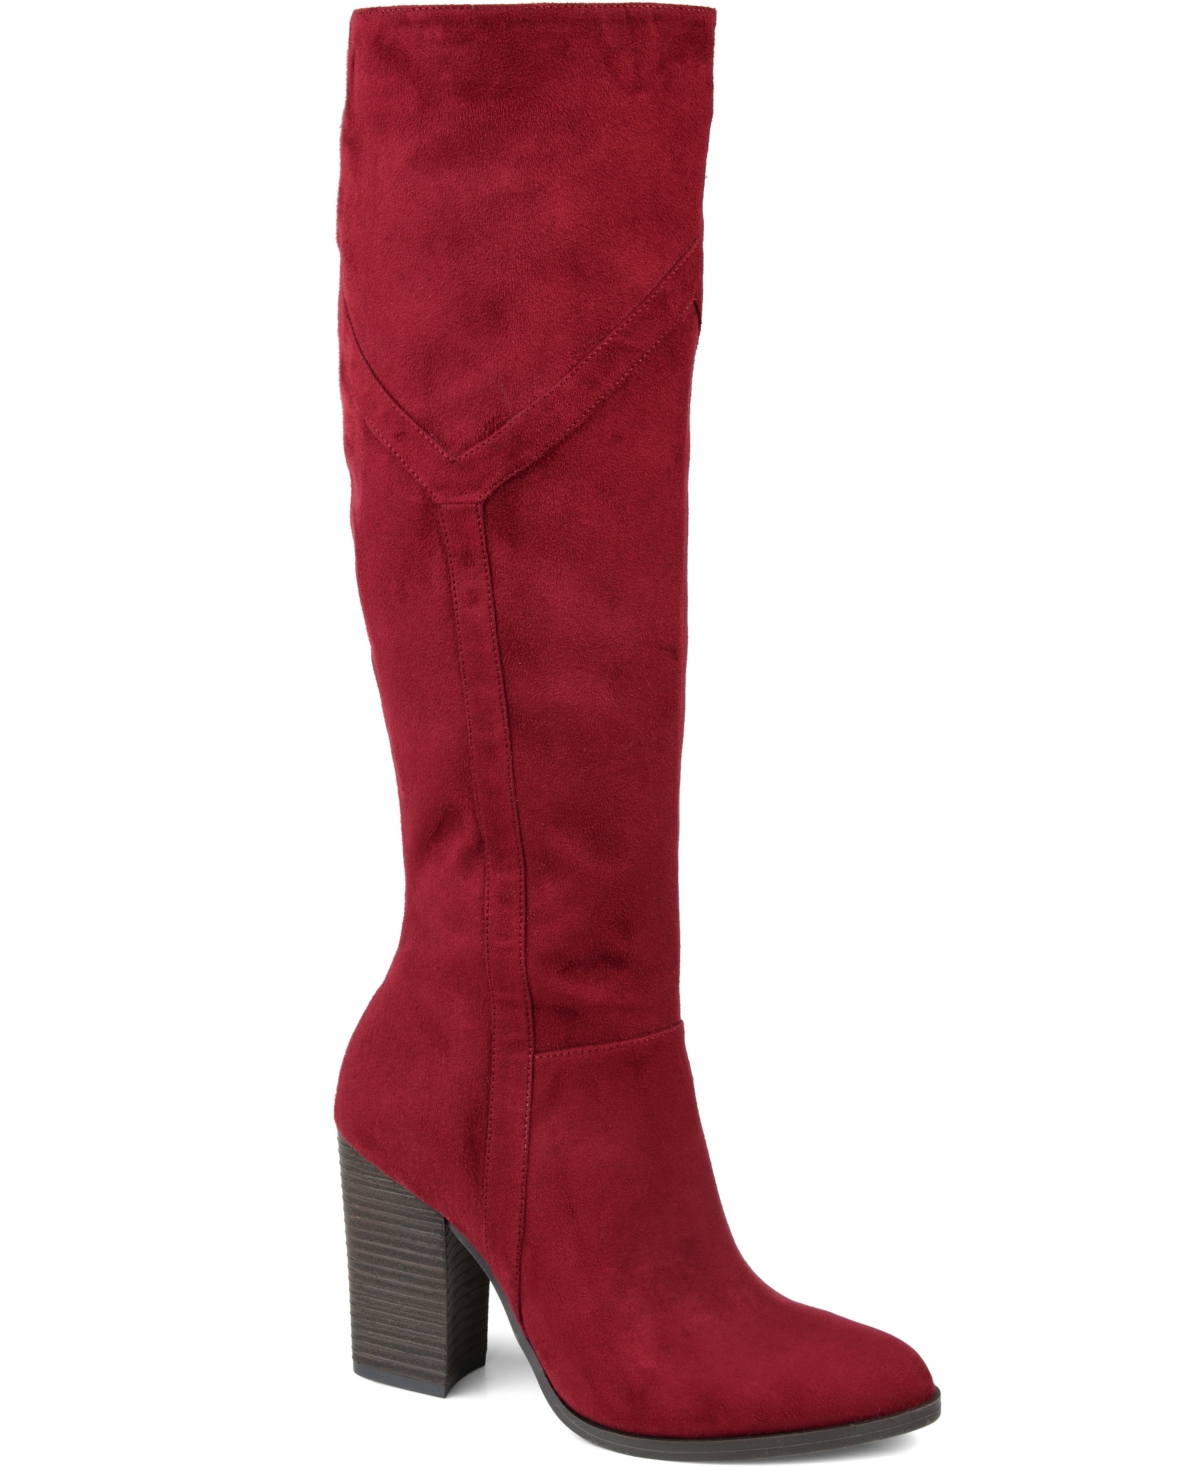 Women's Kyllie Wide Calf Boots - Beige